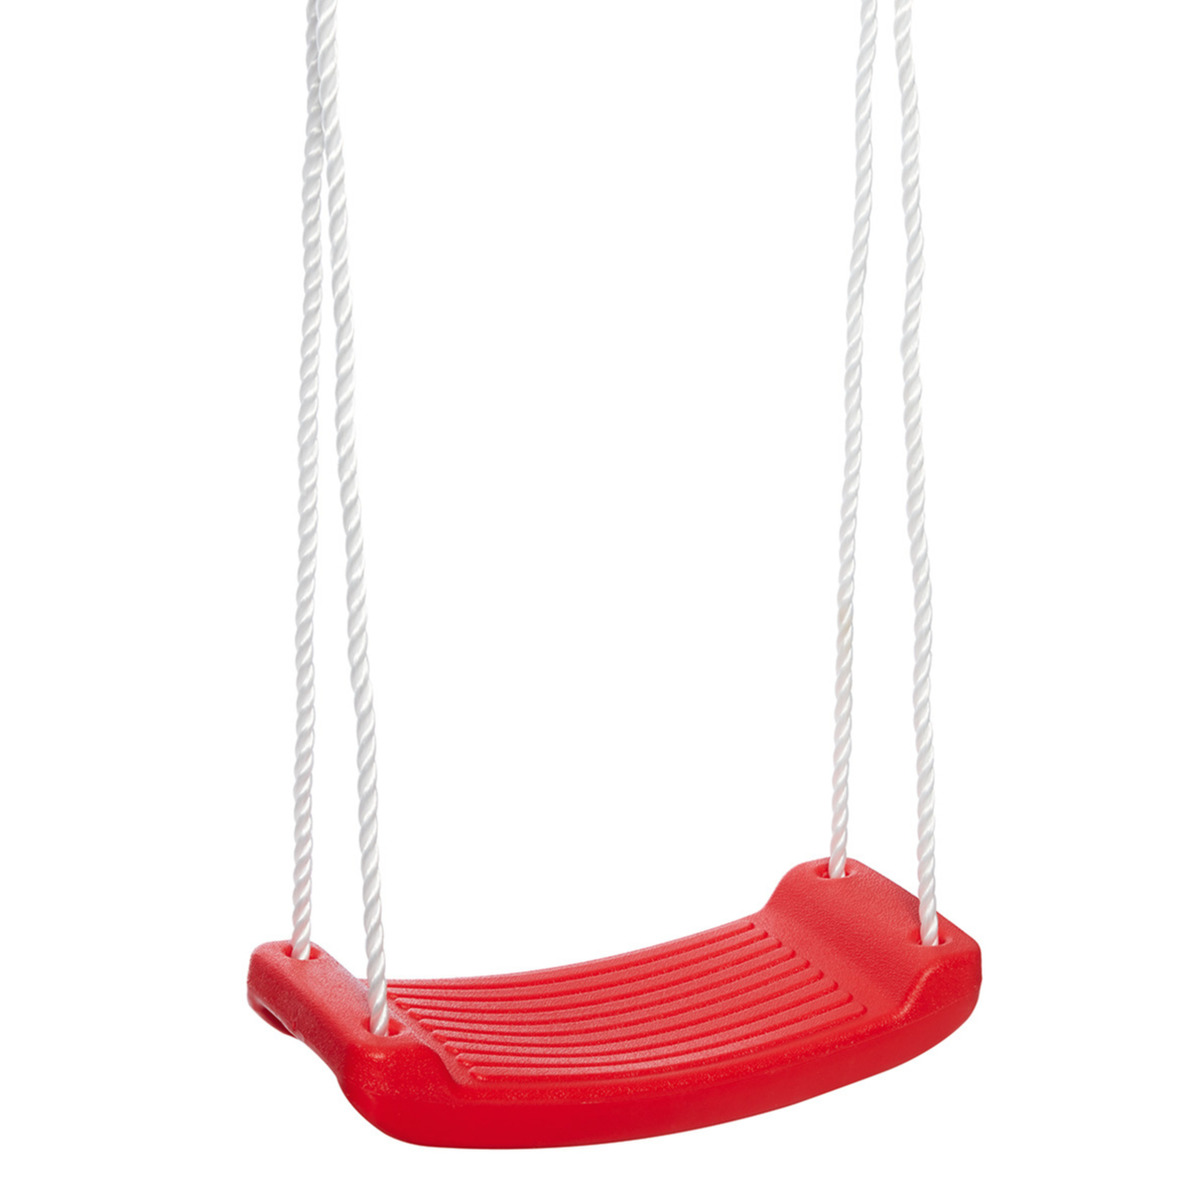 Rode schommel-kinderschommel zitje 42 x 16 cm